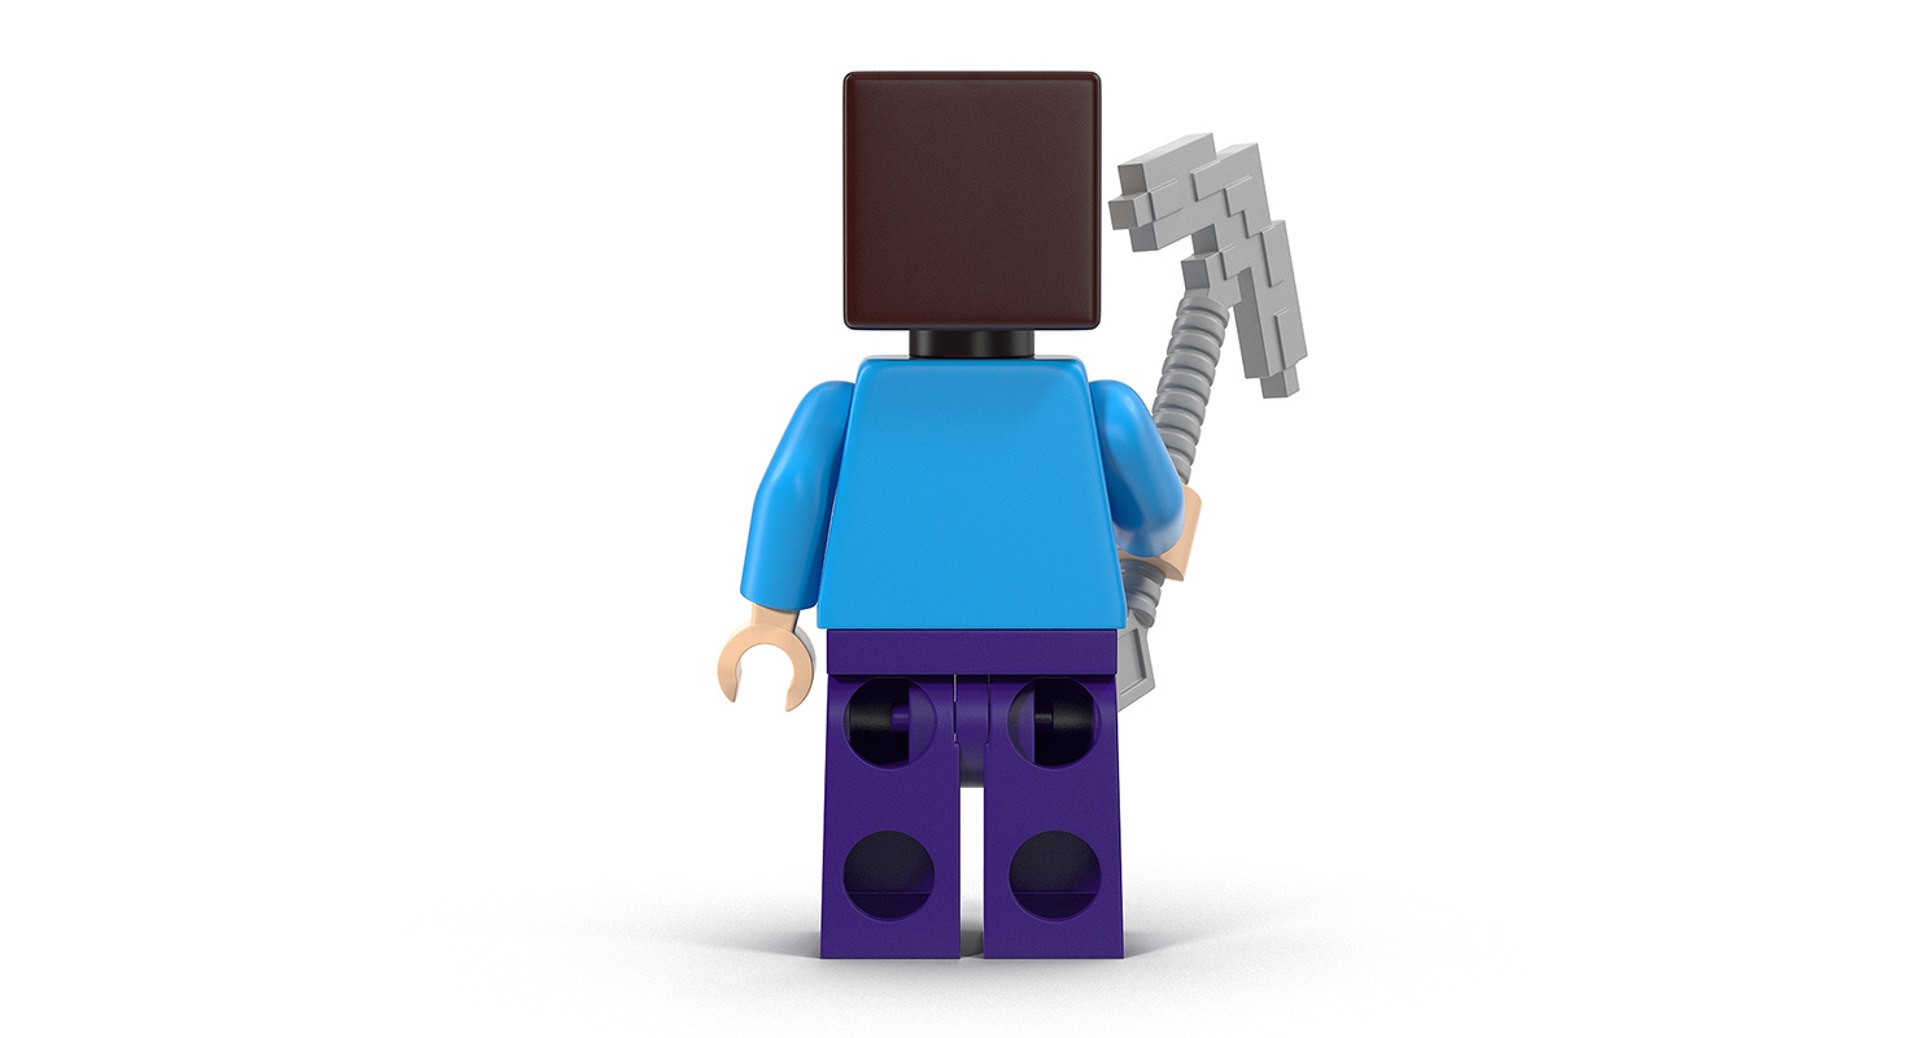 Lego minecraft steve model - TurboSquid 1181713